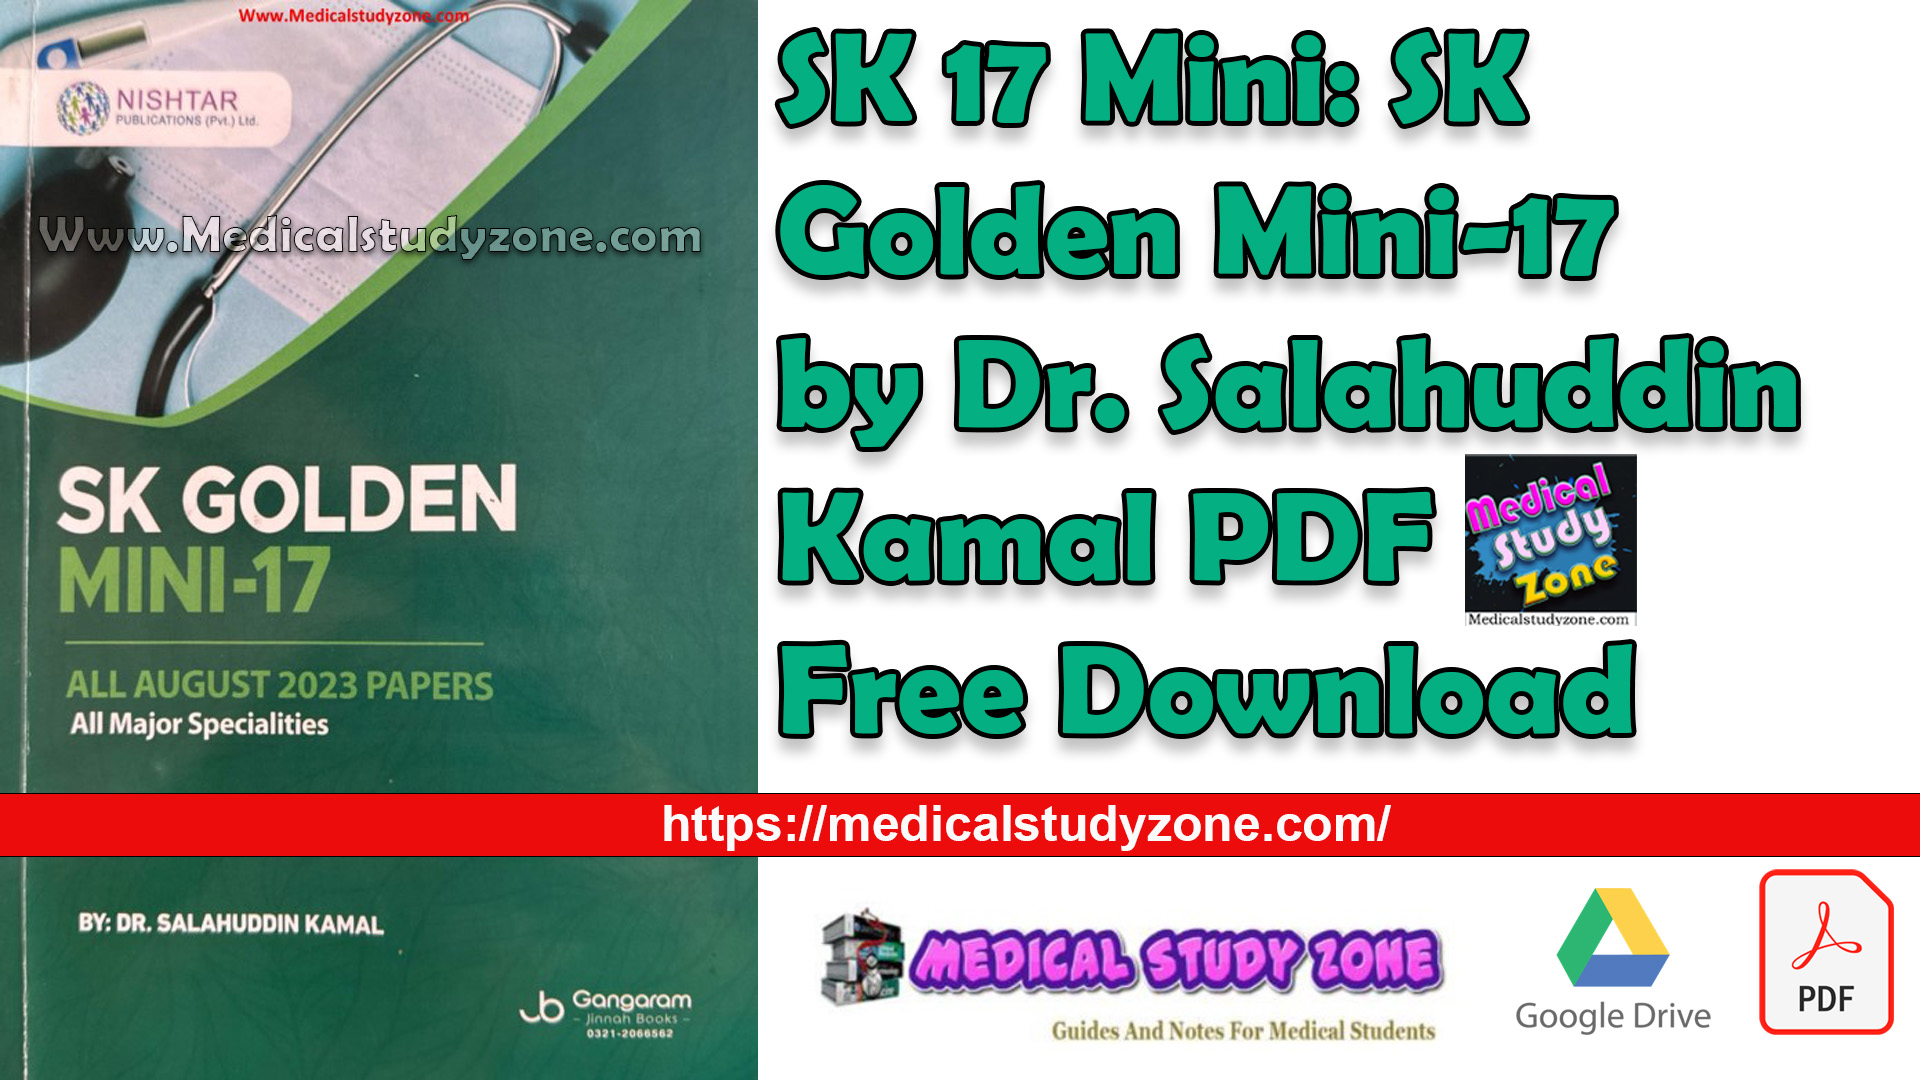 SK 17 Mini: SK Golden Mini-17 by Dr. Salahuddin Kamal PDF Free Download